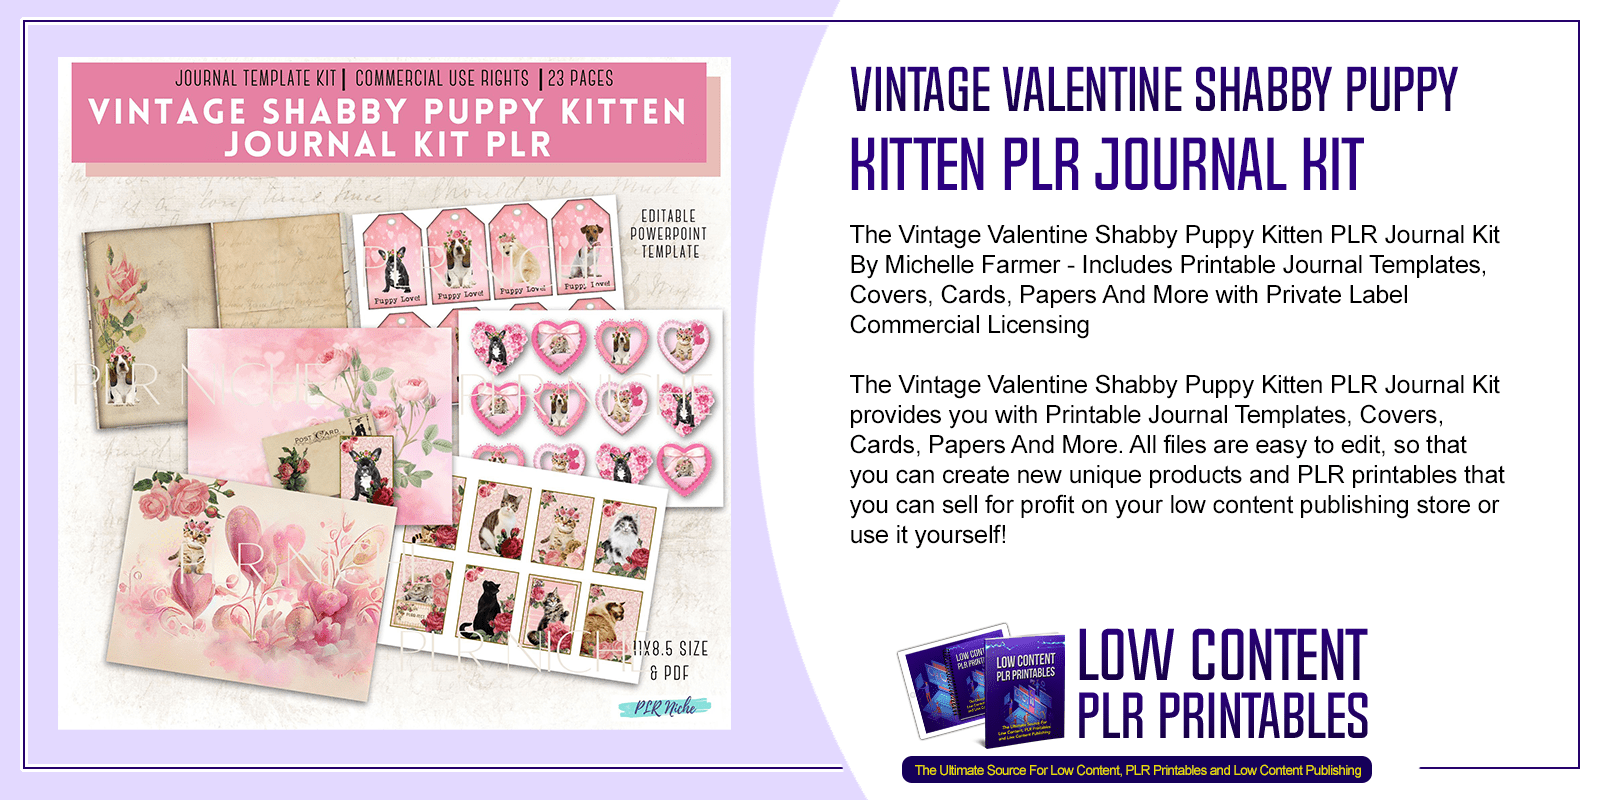 Vintage Valentine Shabby Puppy Kitten PLR Journal Kit